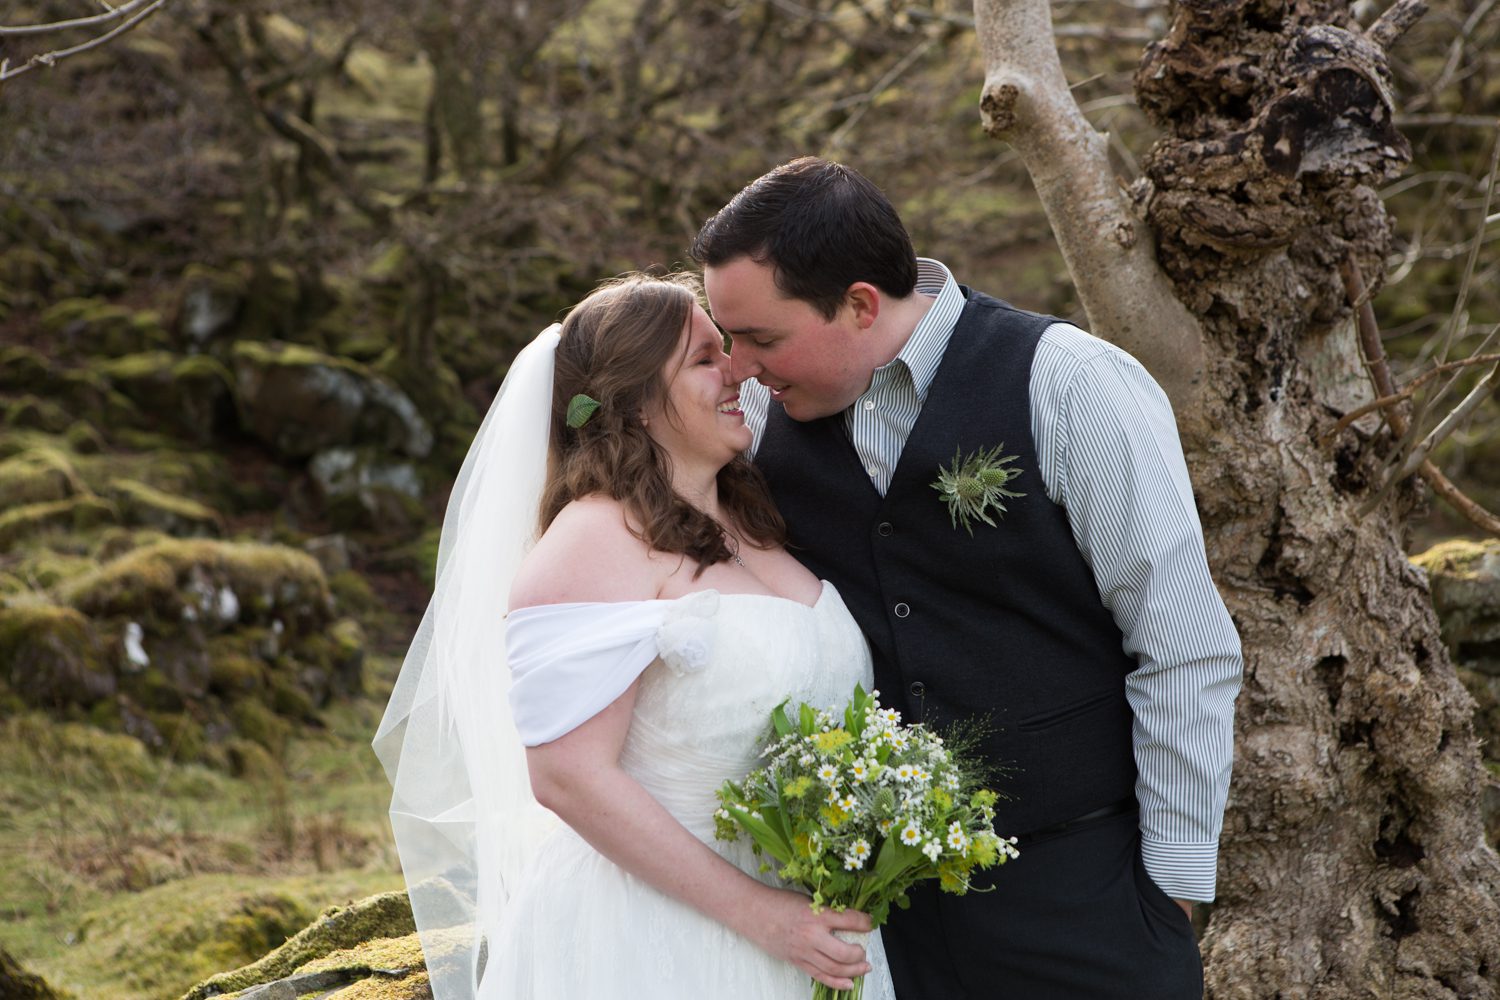 Fairy Glen wedding photography, Quiraing wedding photography, Isle of Skye wedding photography, Skye elopement